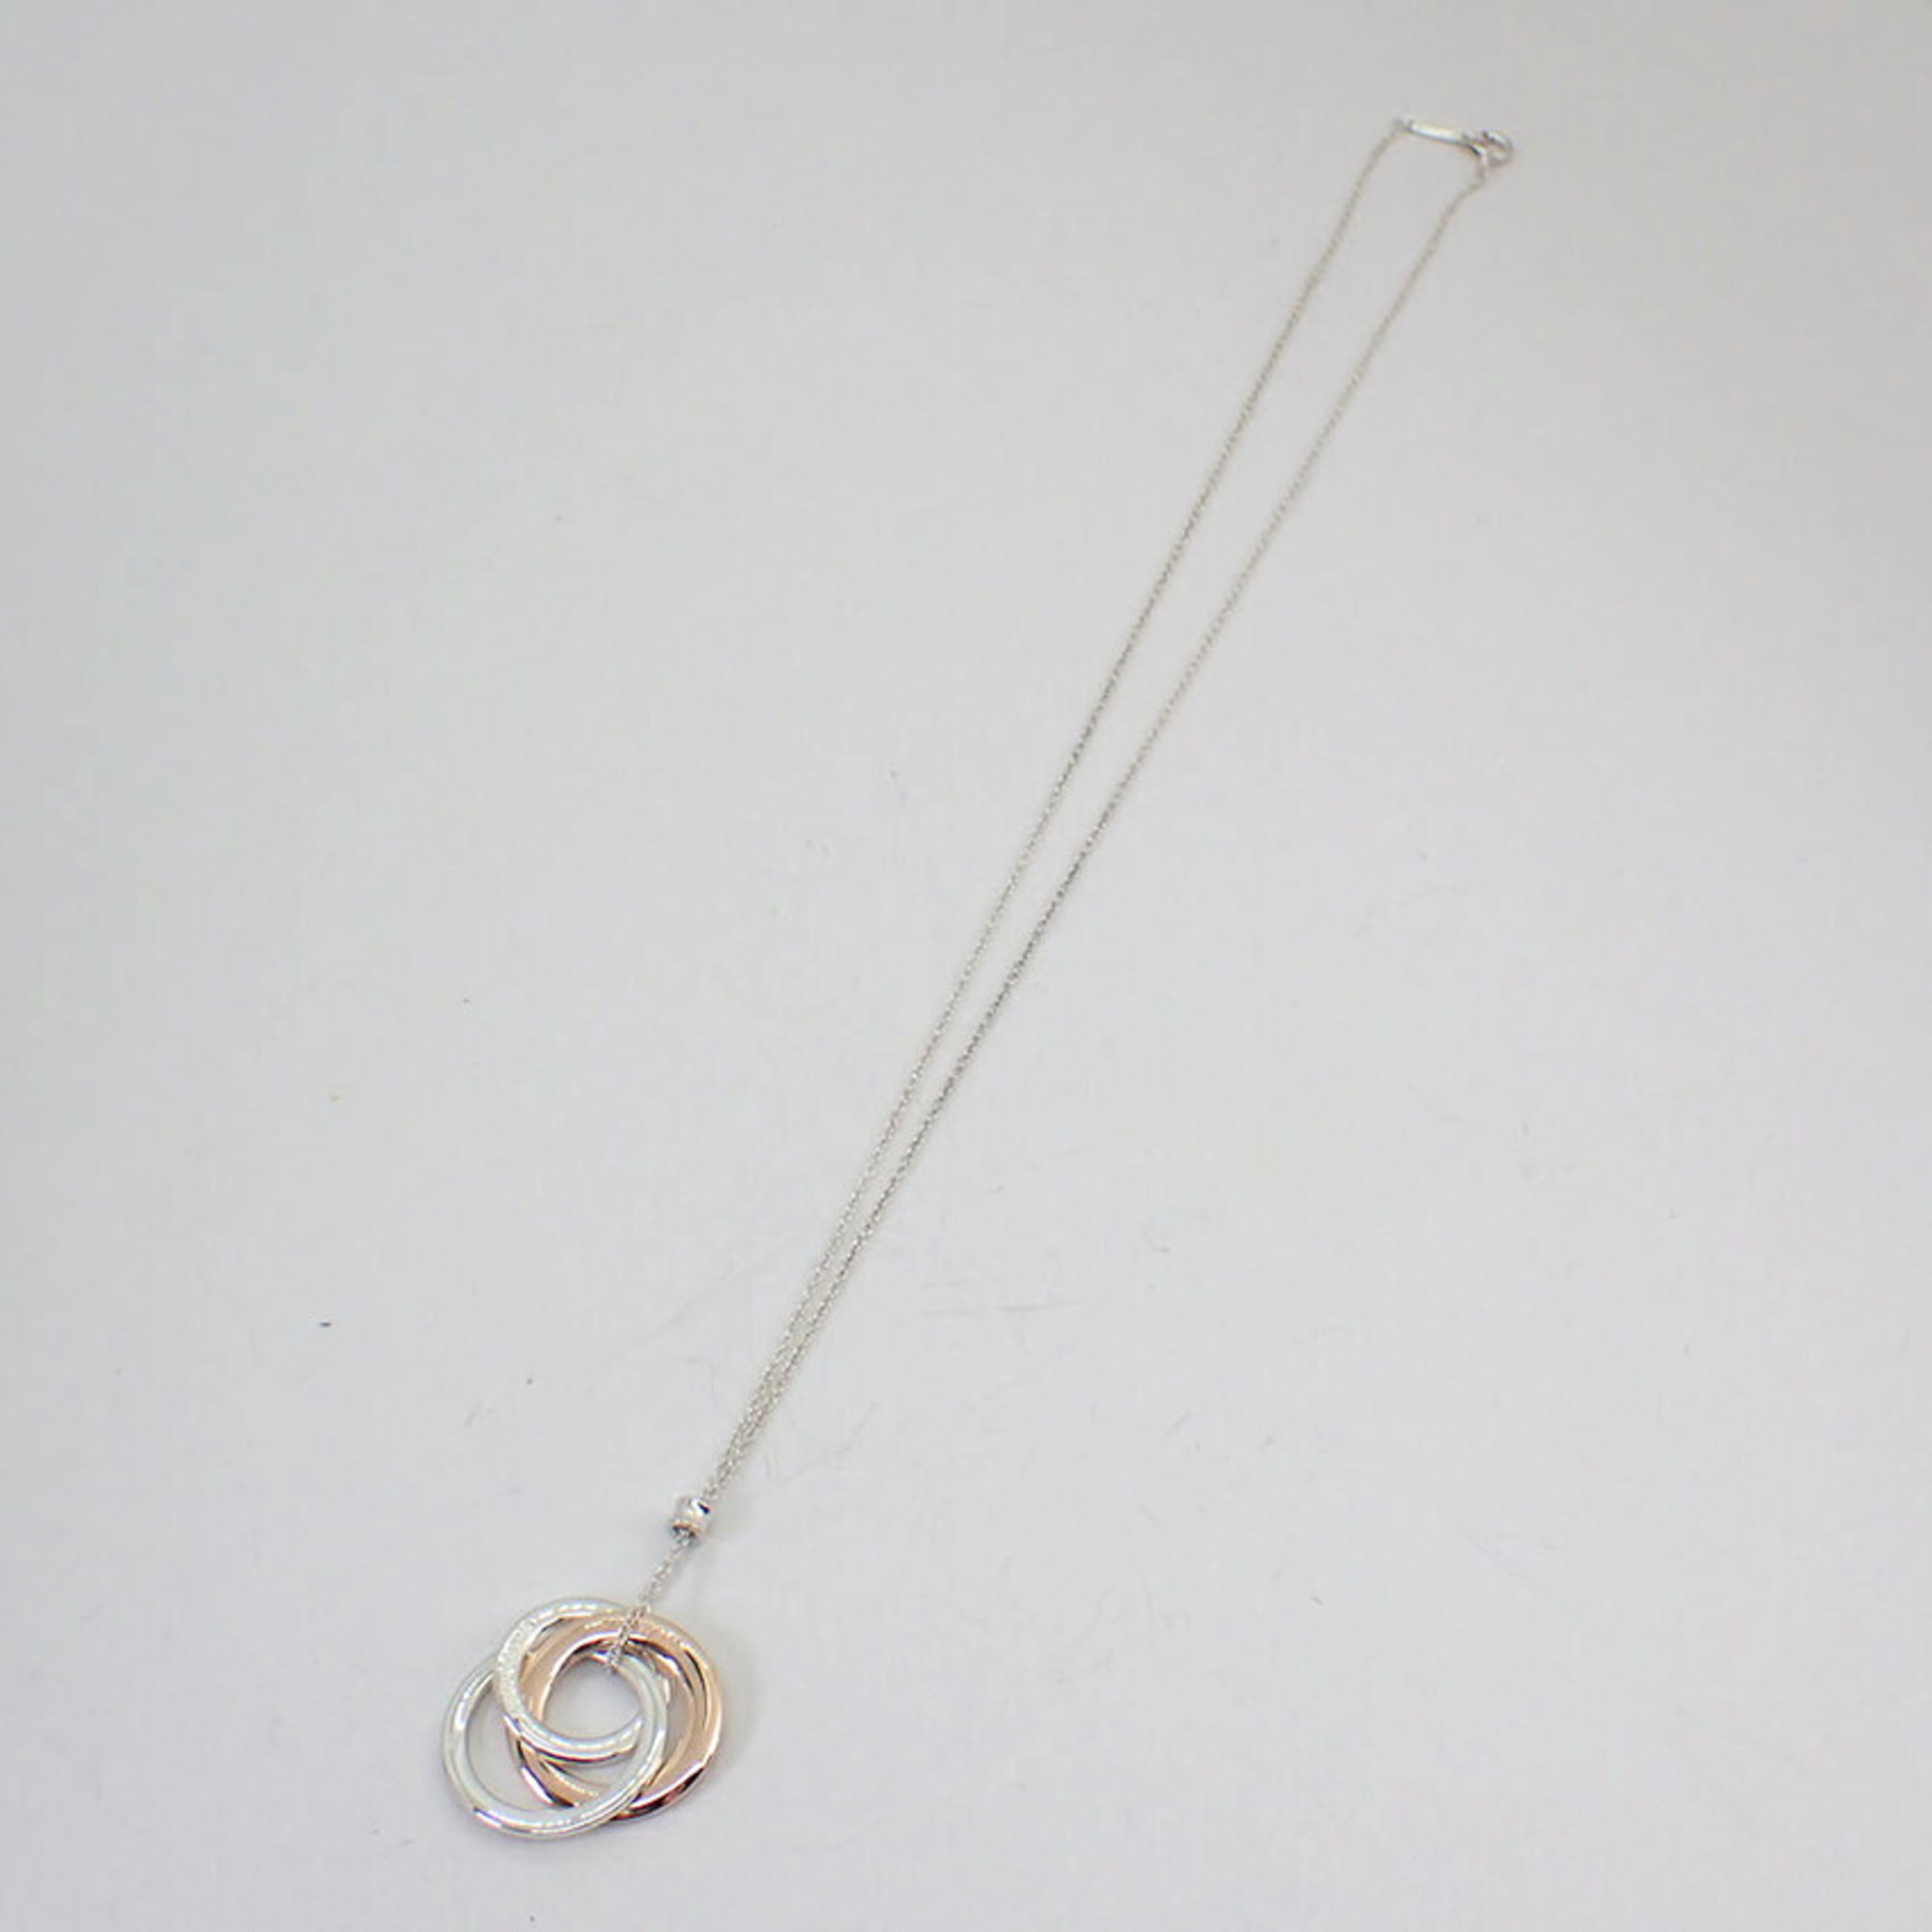 TIFFANY 925 metal 1837 interlocking circle necklace